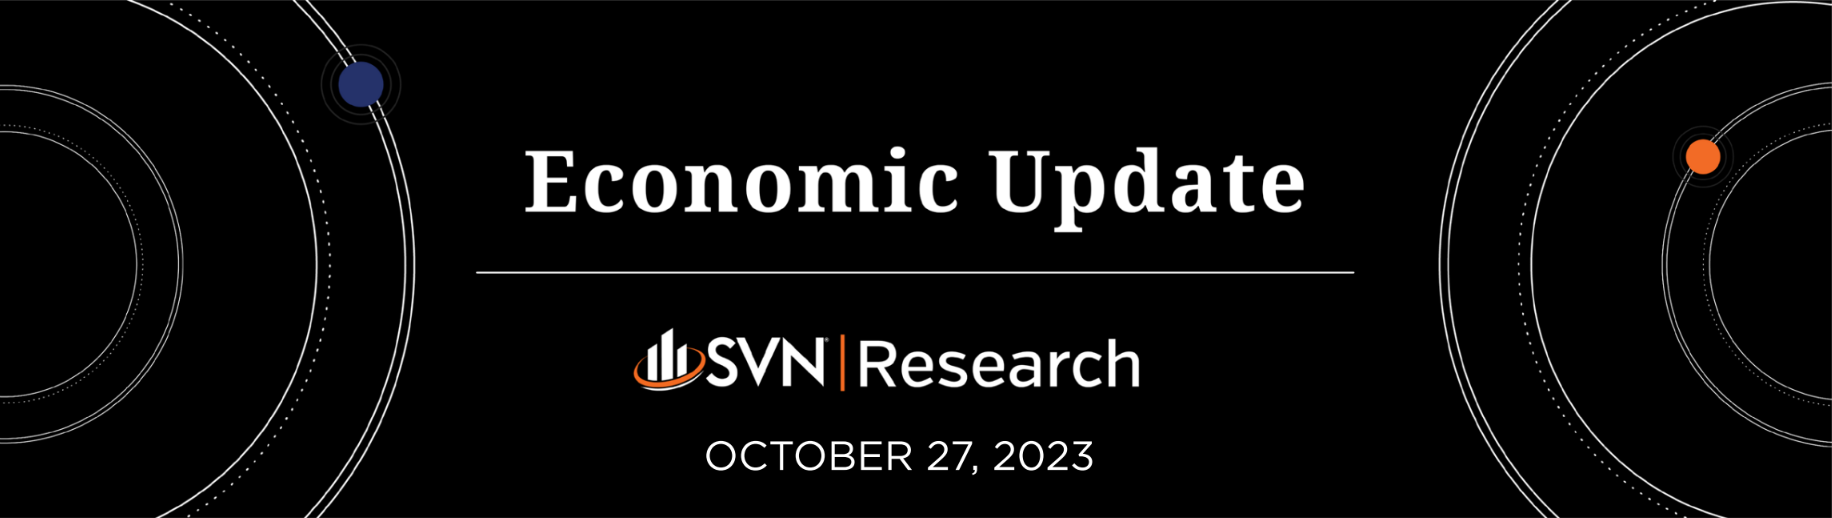 SVN | Research Economic Update 10.27.2023